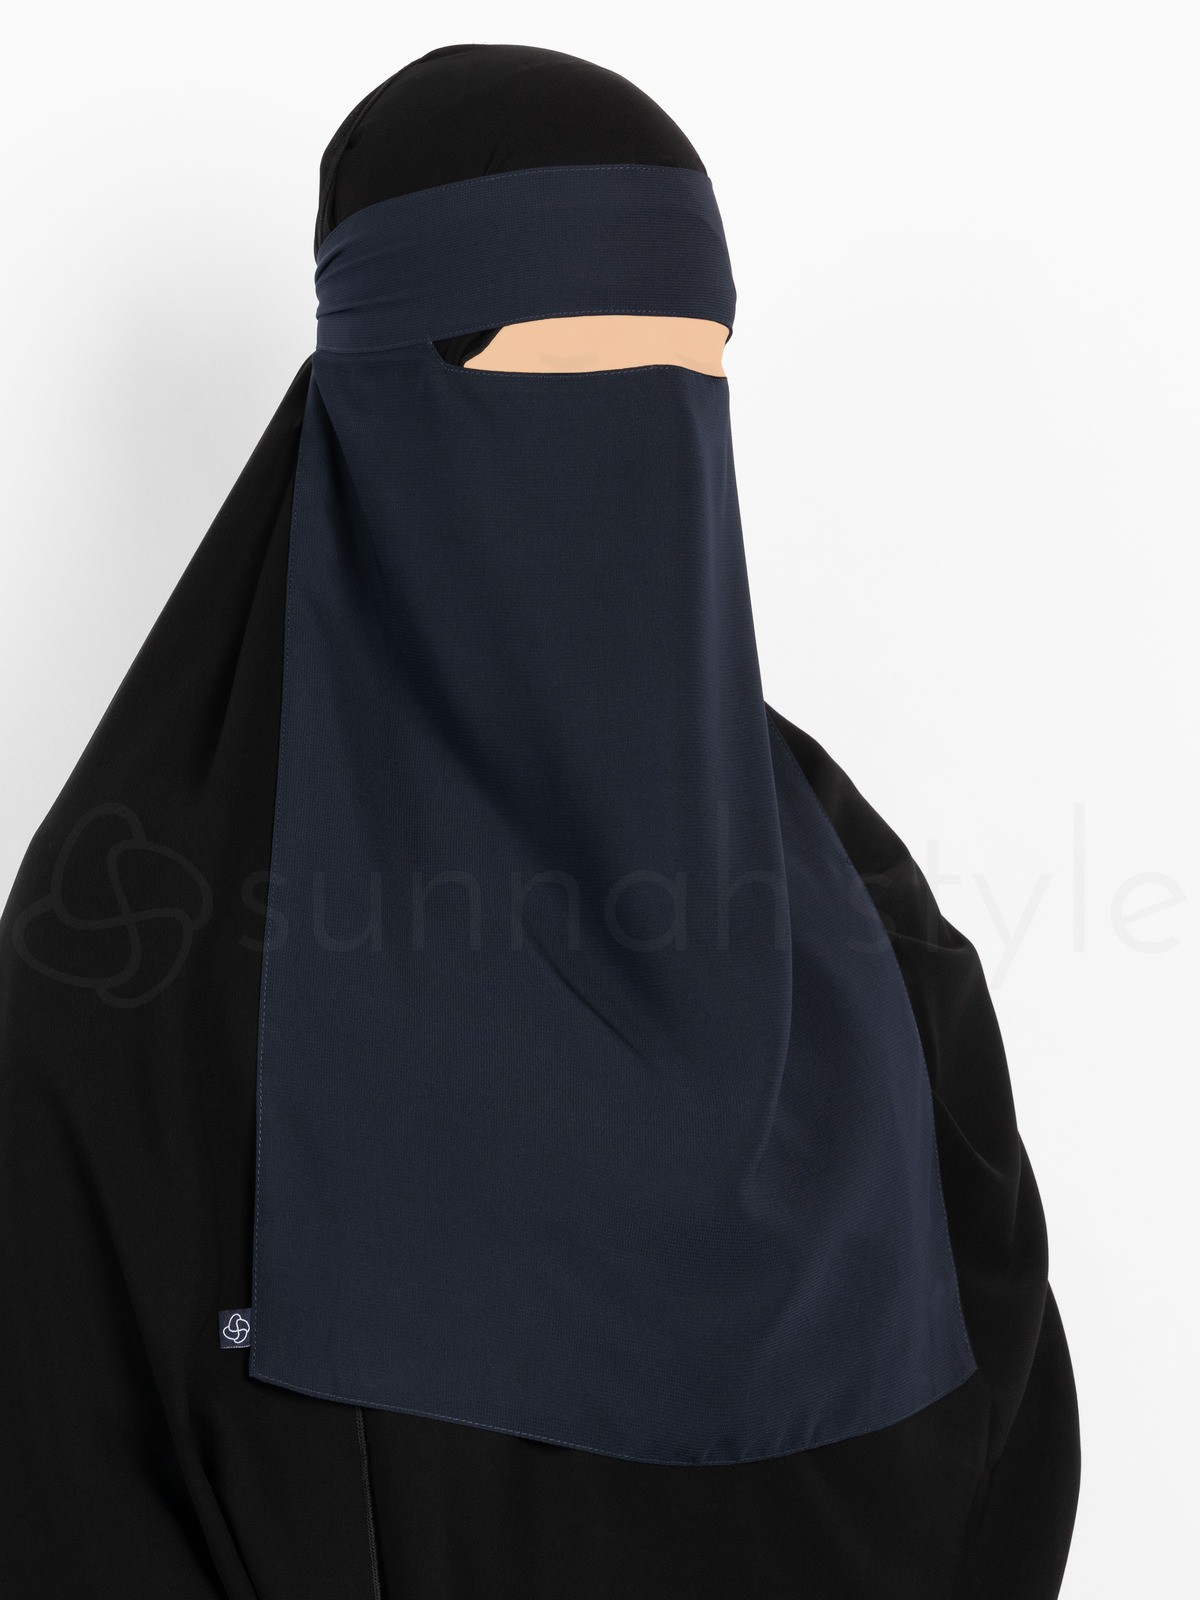 Sunnah Style - Narrow No-Pinch One Layer Niqab (Twilight Mauve)